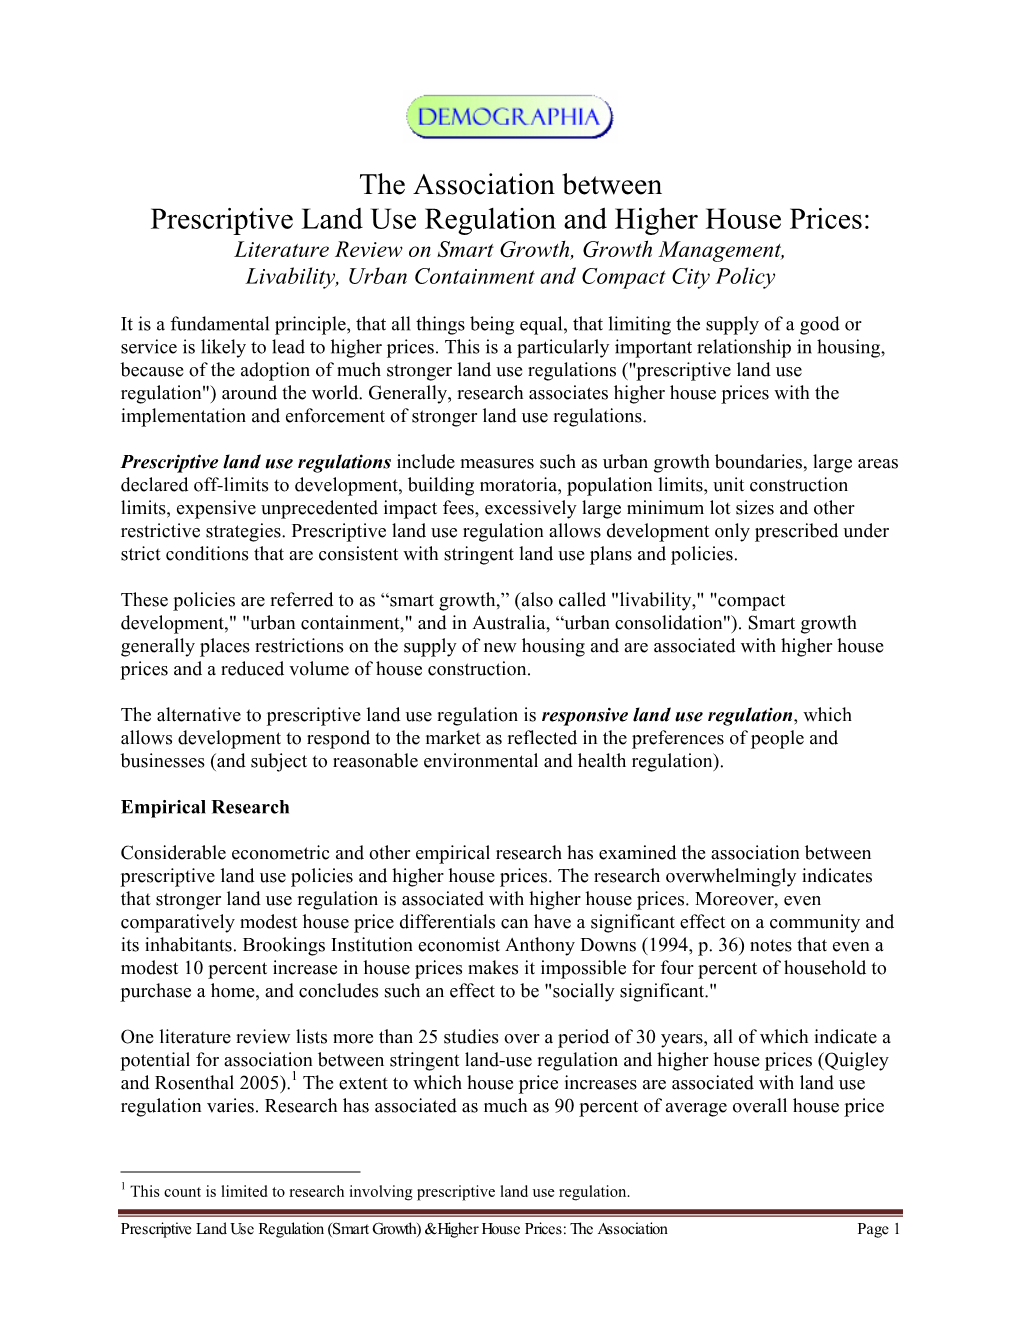 The Association Between Prescriptive Land Use